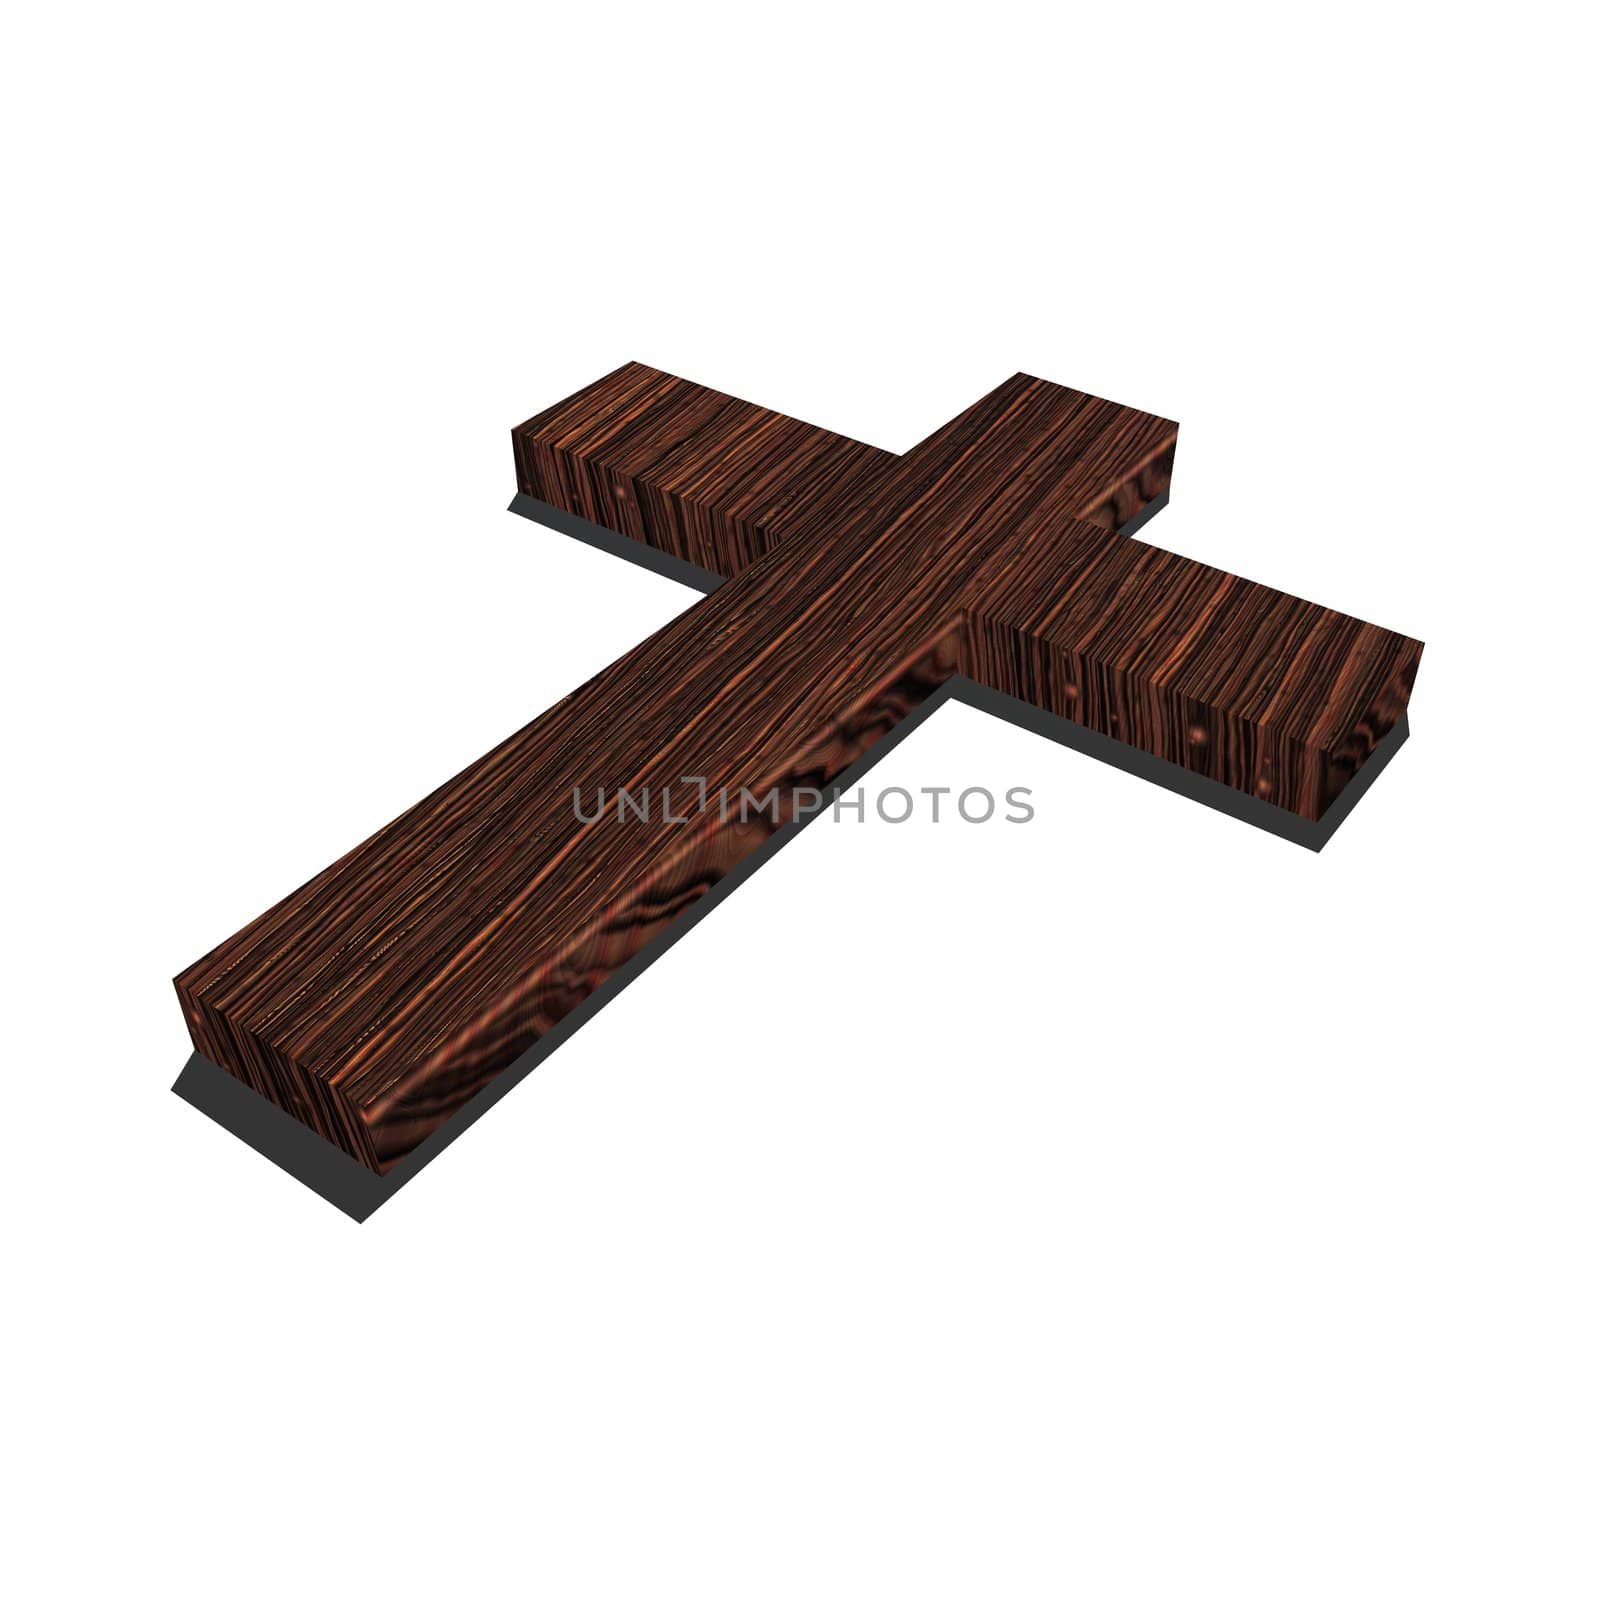 Wood cross by Elenaphotos21